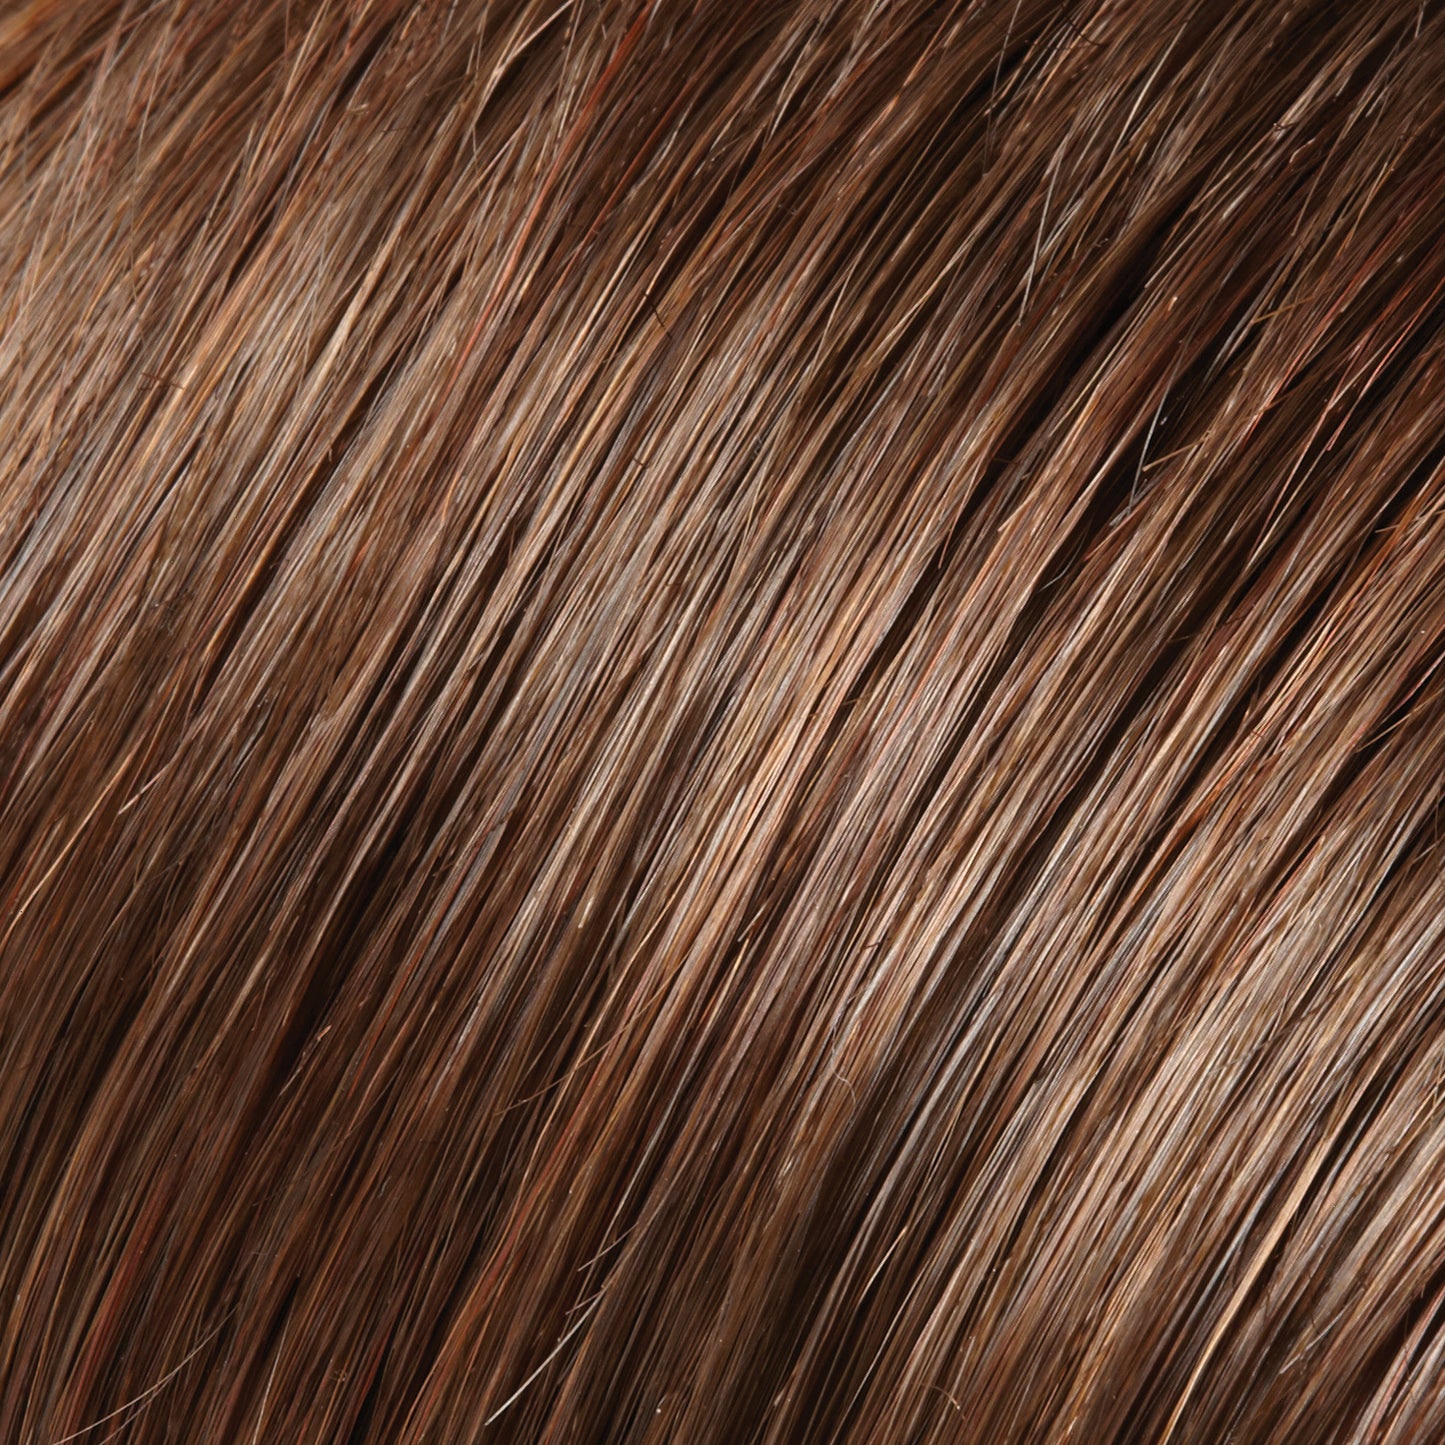 Foxy Synthetic clip-in ponytail - Jon Renau